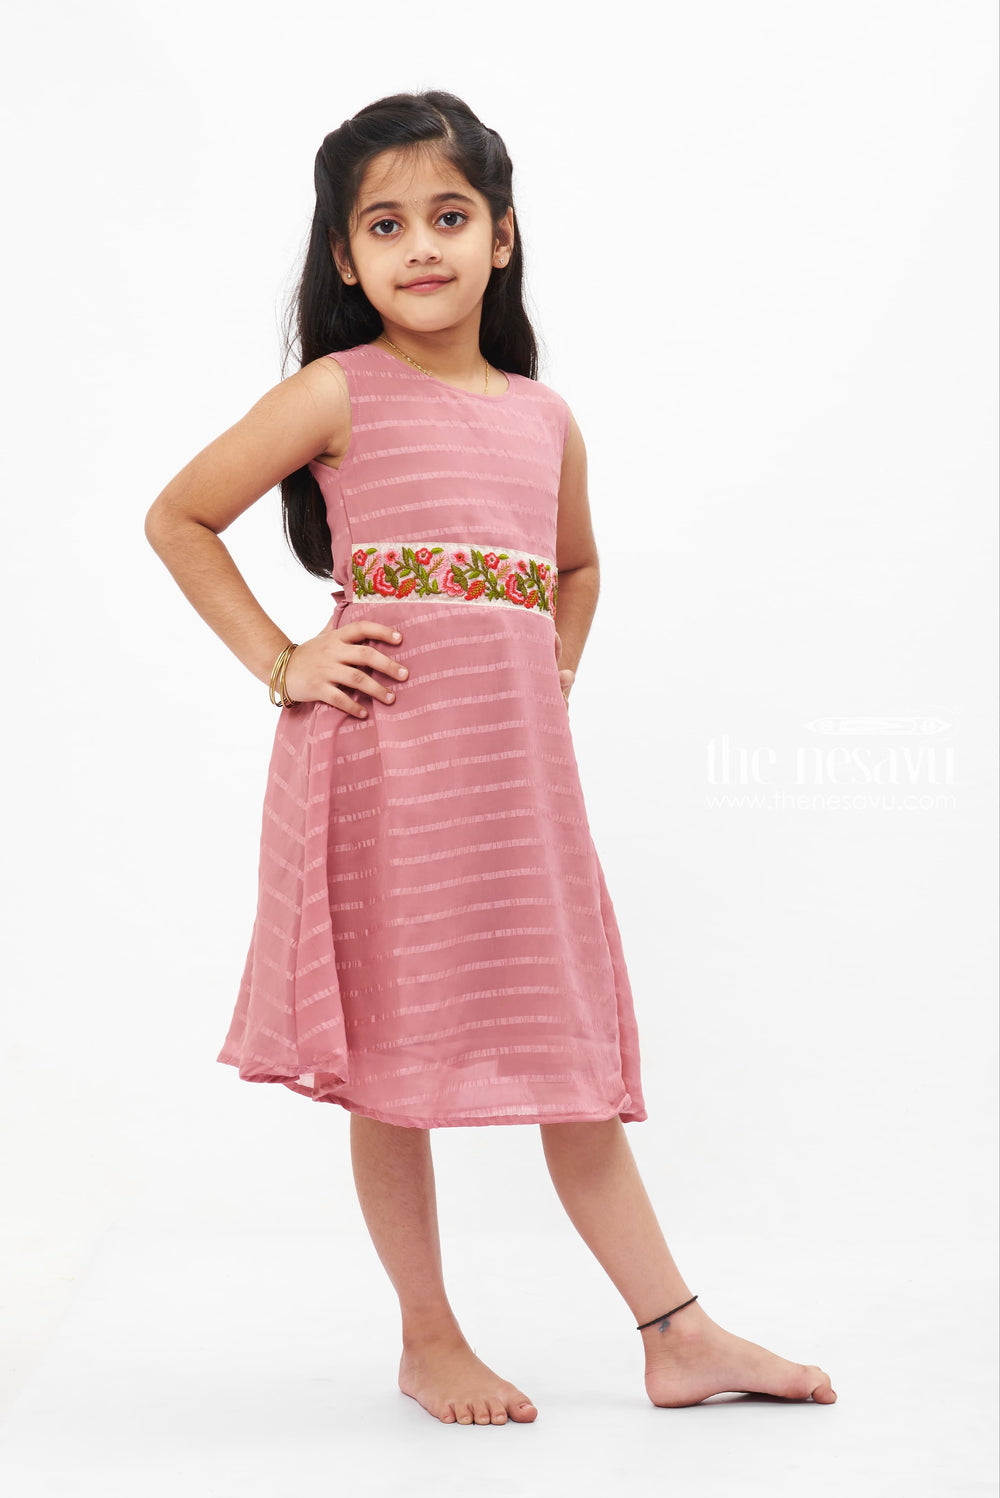 The Nesavu Girls Fancy Frock Blush Pink Elegance Dress: Subtle Stripes with Floral Embroidery for Girls Nesavu Girls' Blush Pink Stripe Dress | Floral Embroidered Frock | Classic Elegance for Children | The Nesavu